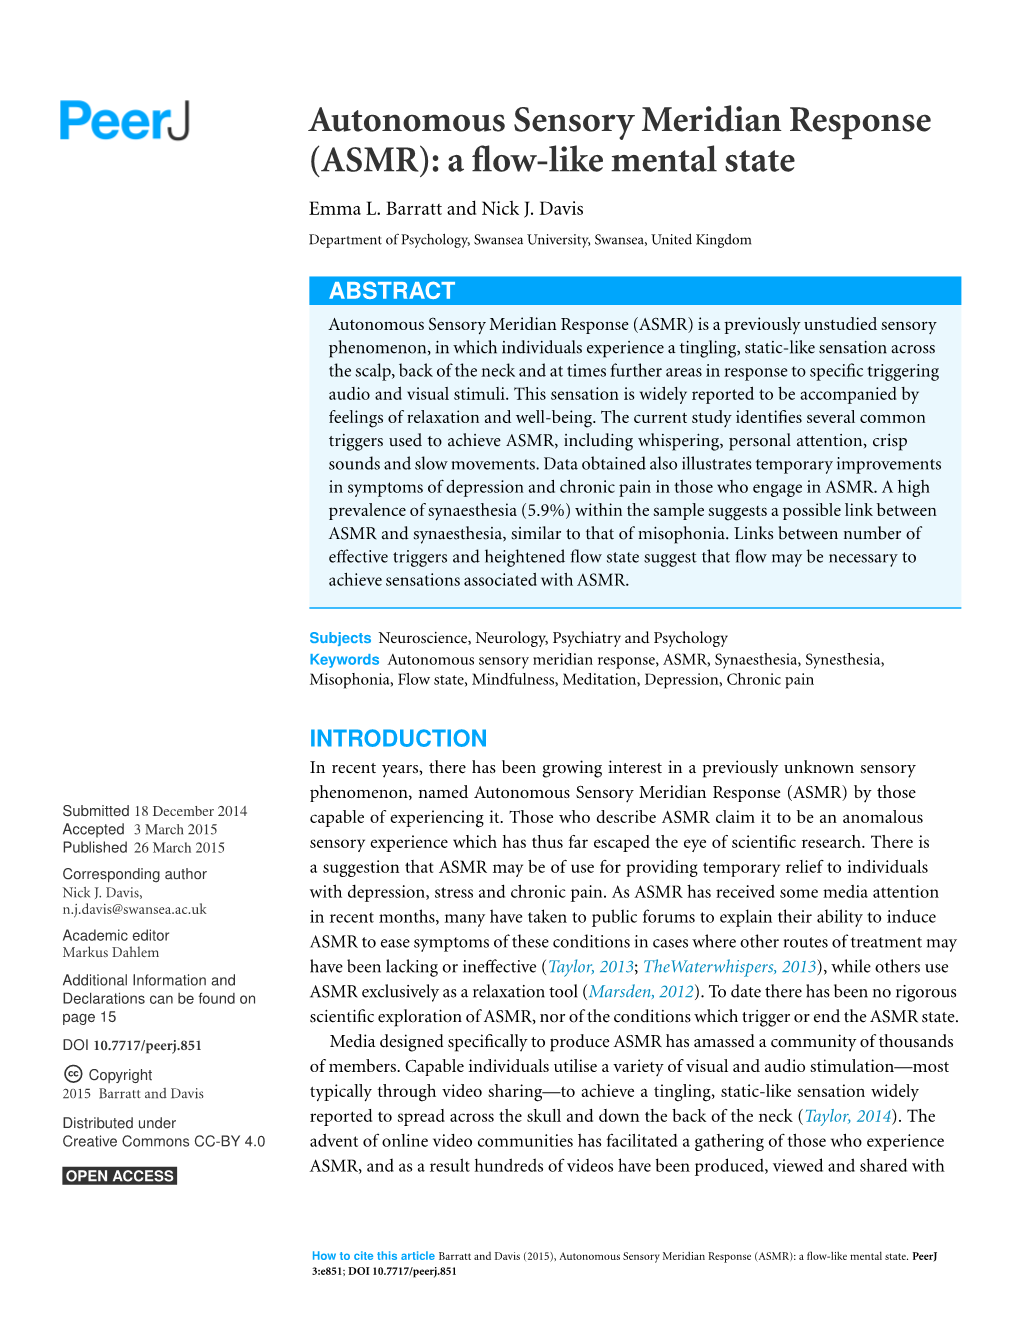 Autonomous Sensory Meridian Response (ASMR): a Flow-Like Mental State Emma L